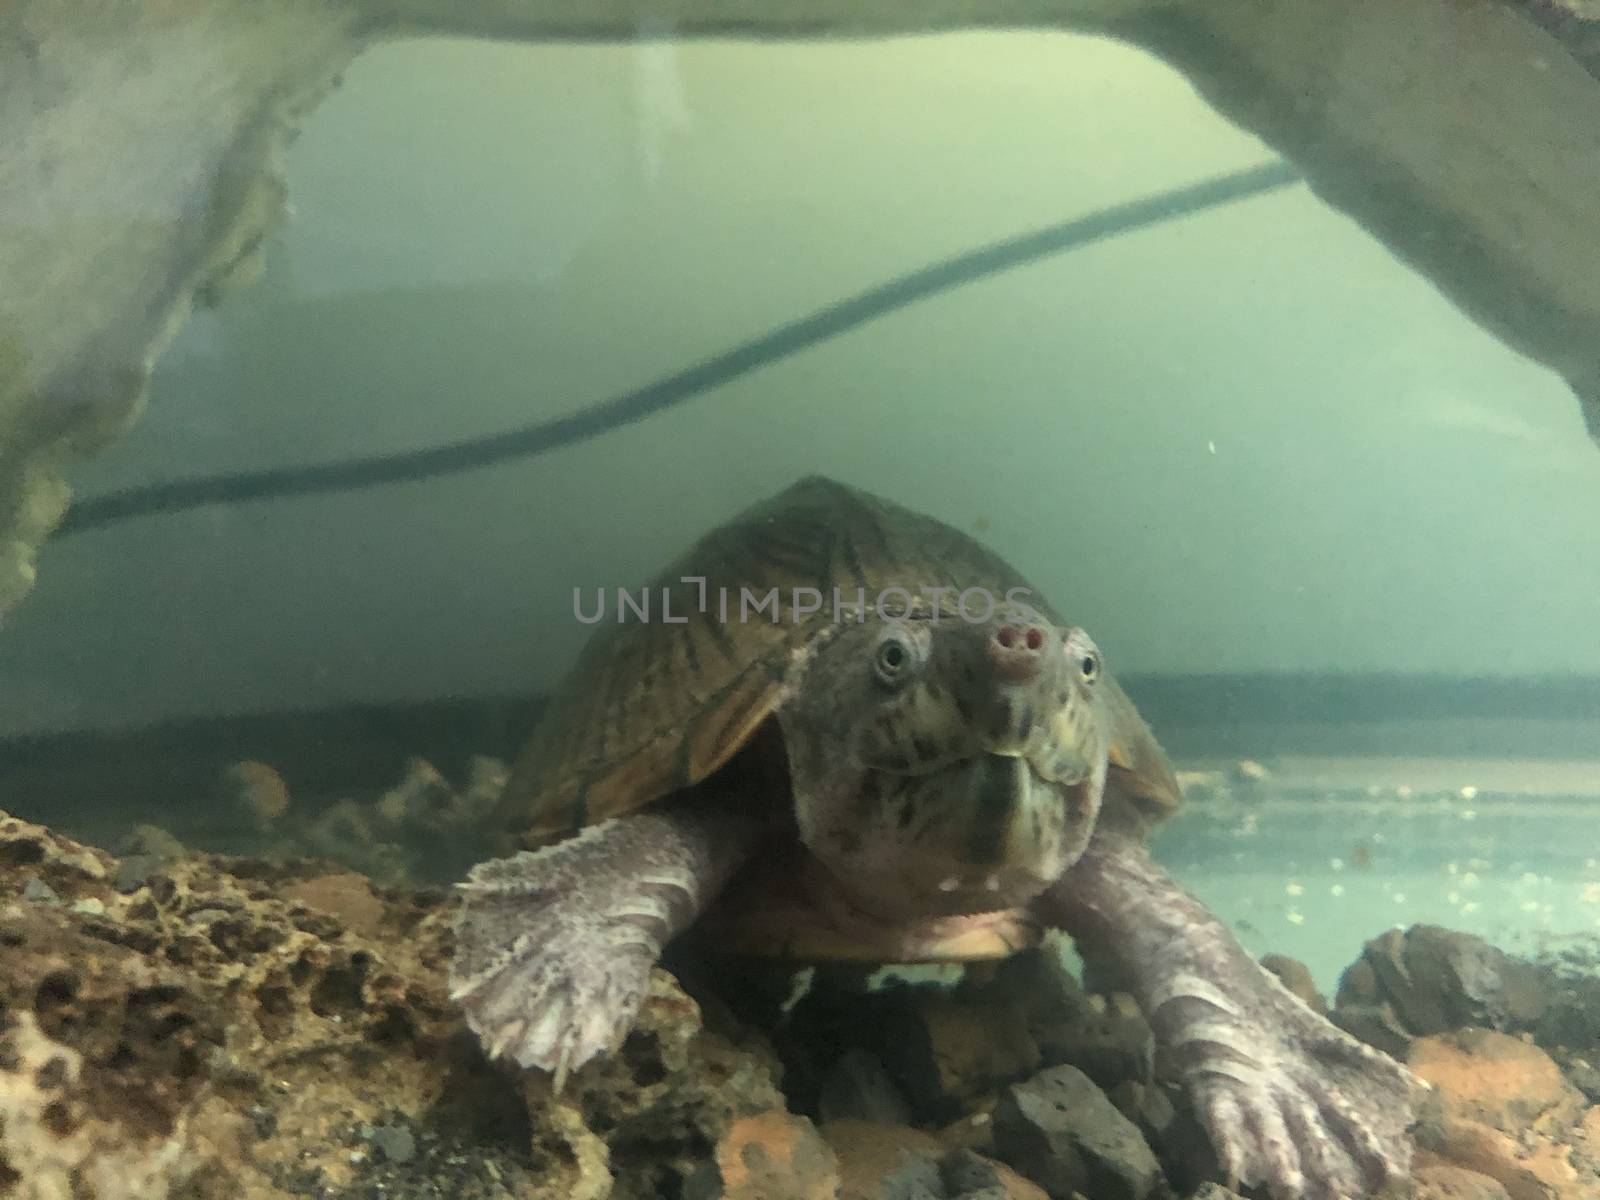 underwater razorback musk turtle closeup photo by mynewturtle1